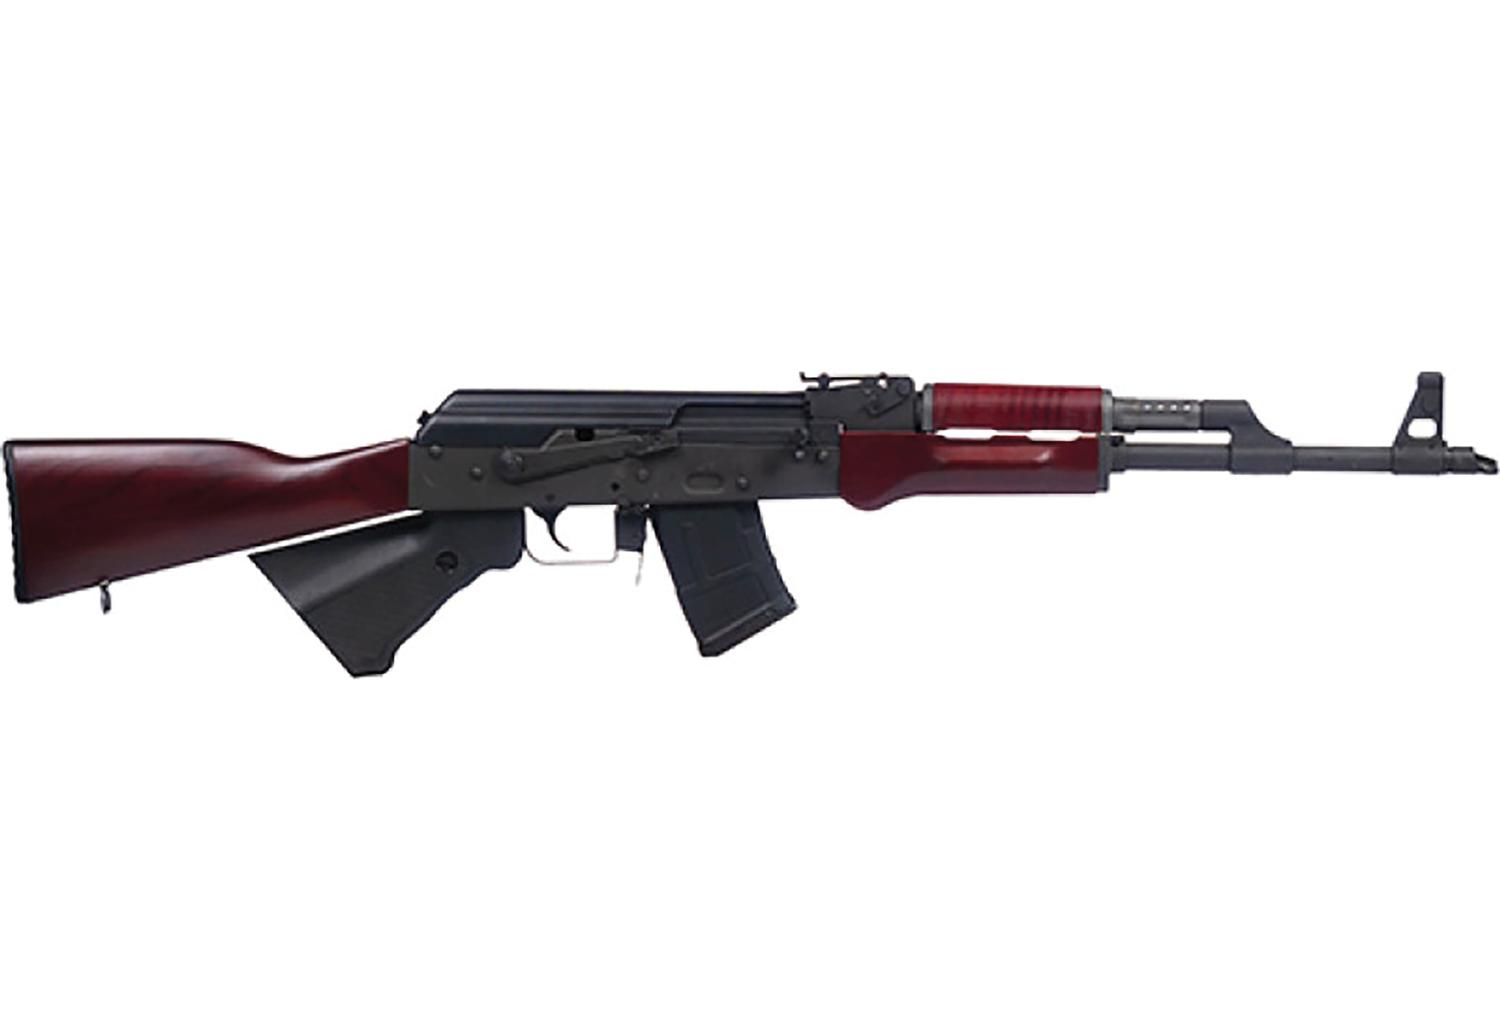  Vska Ak- 47 W/Redwood Stock - Featureless